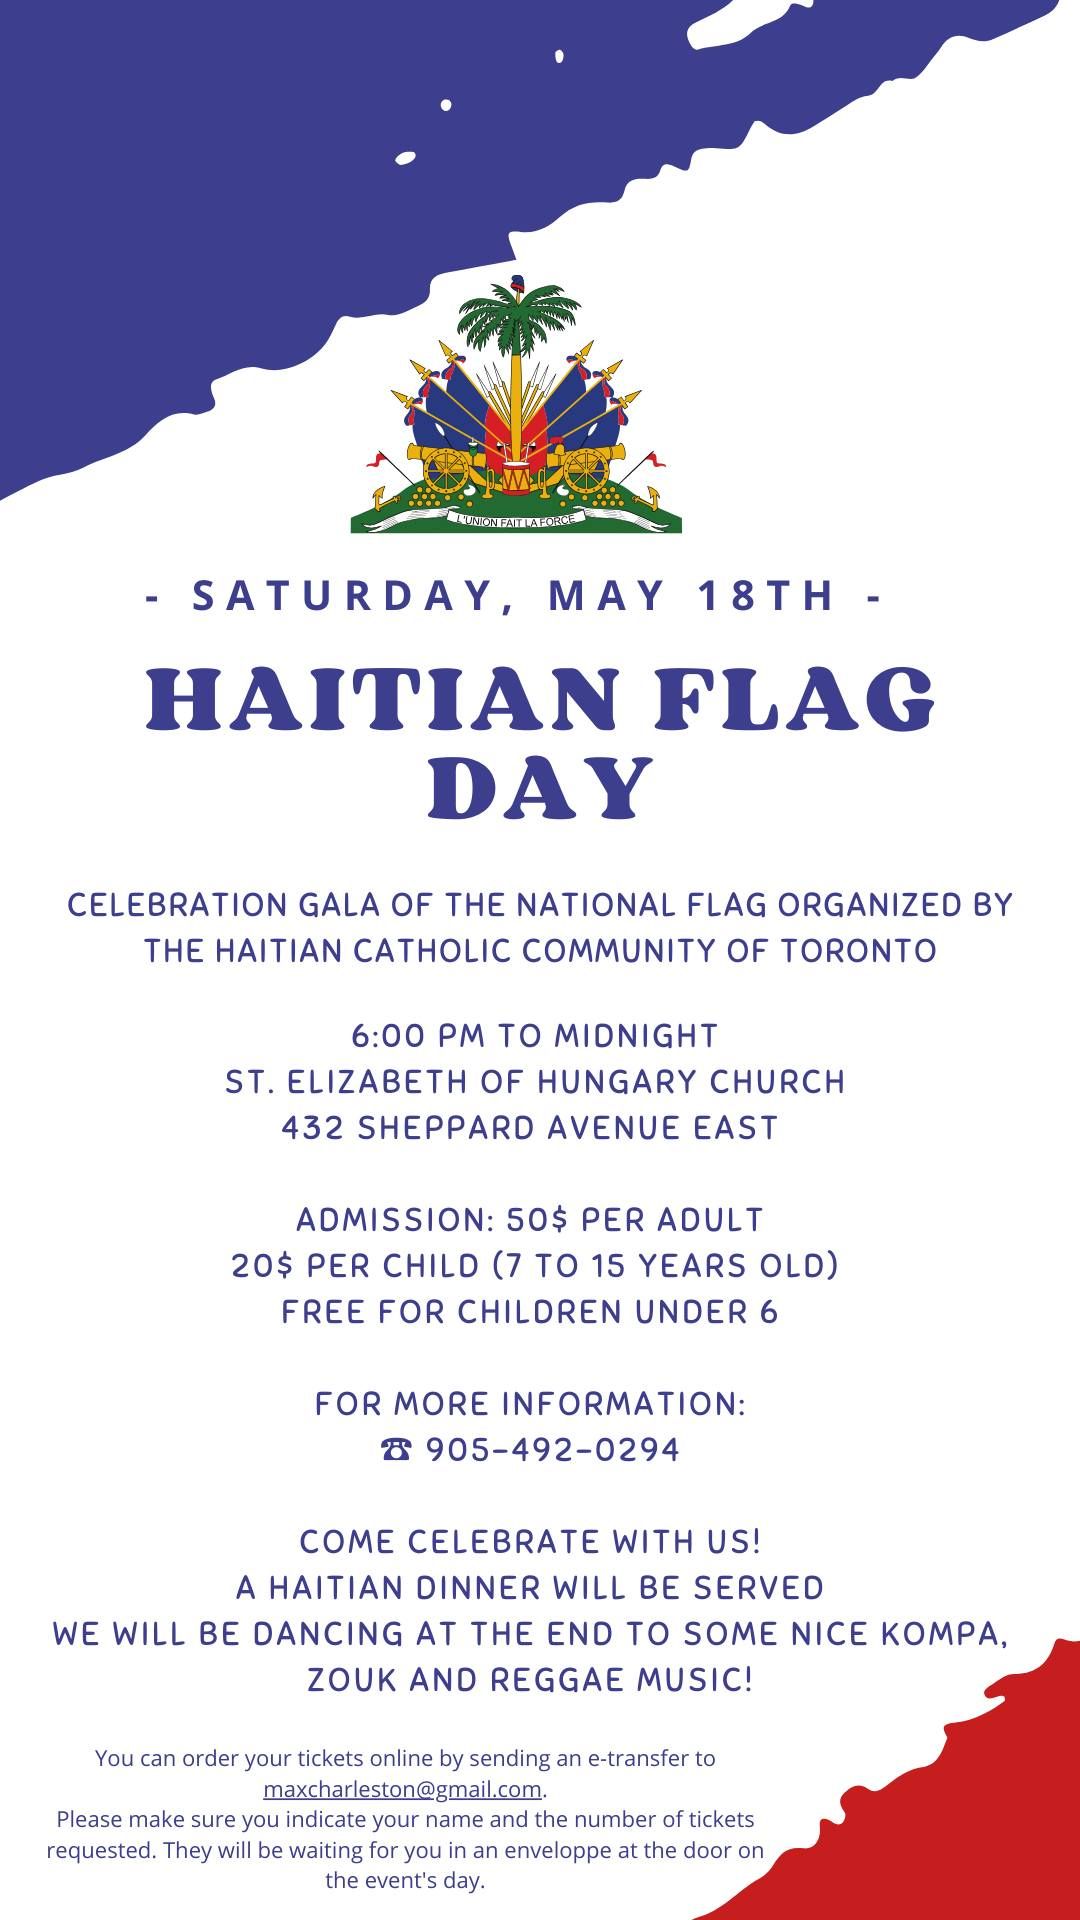 Haitian Flag Day - Let us celebrate together!